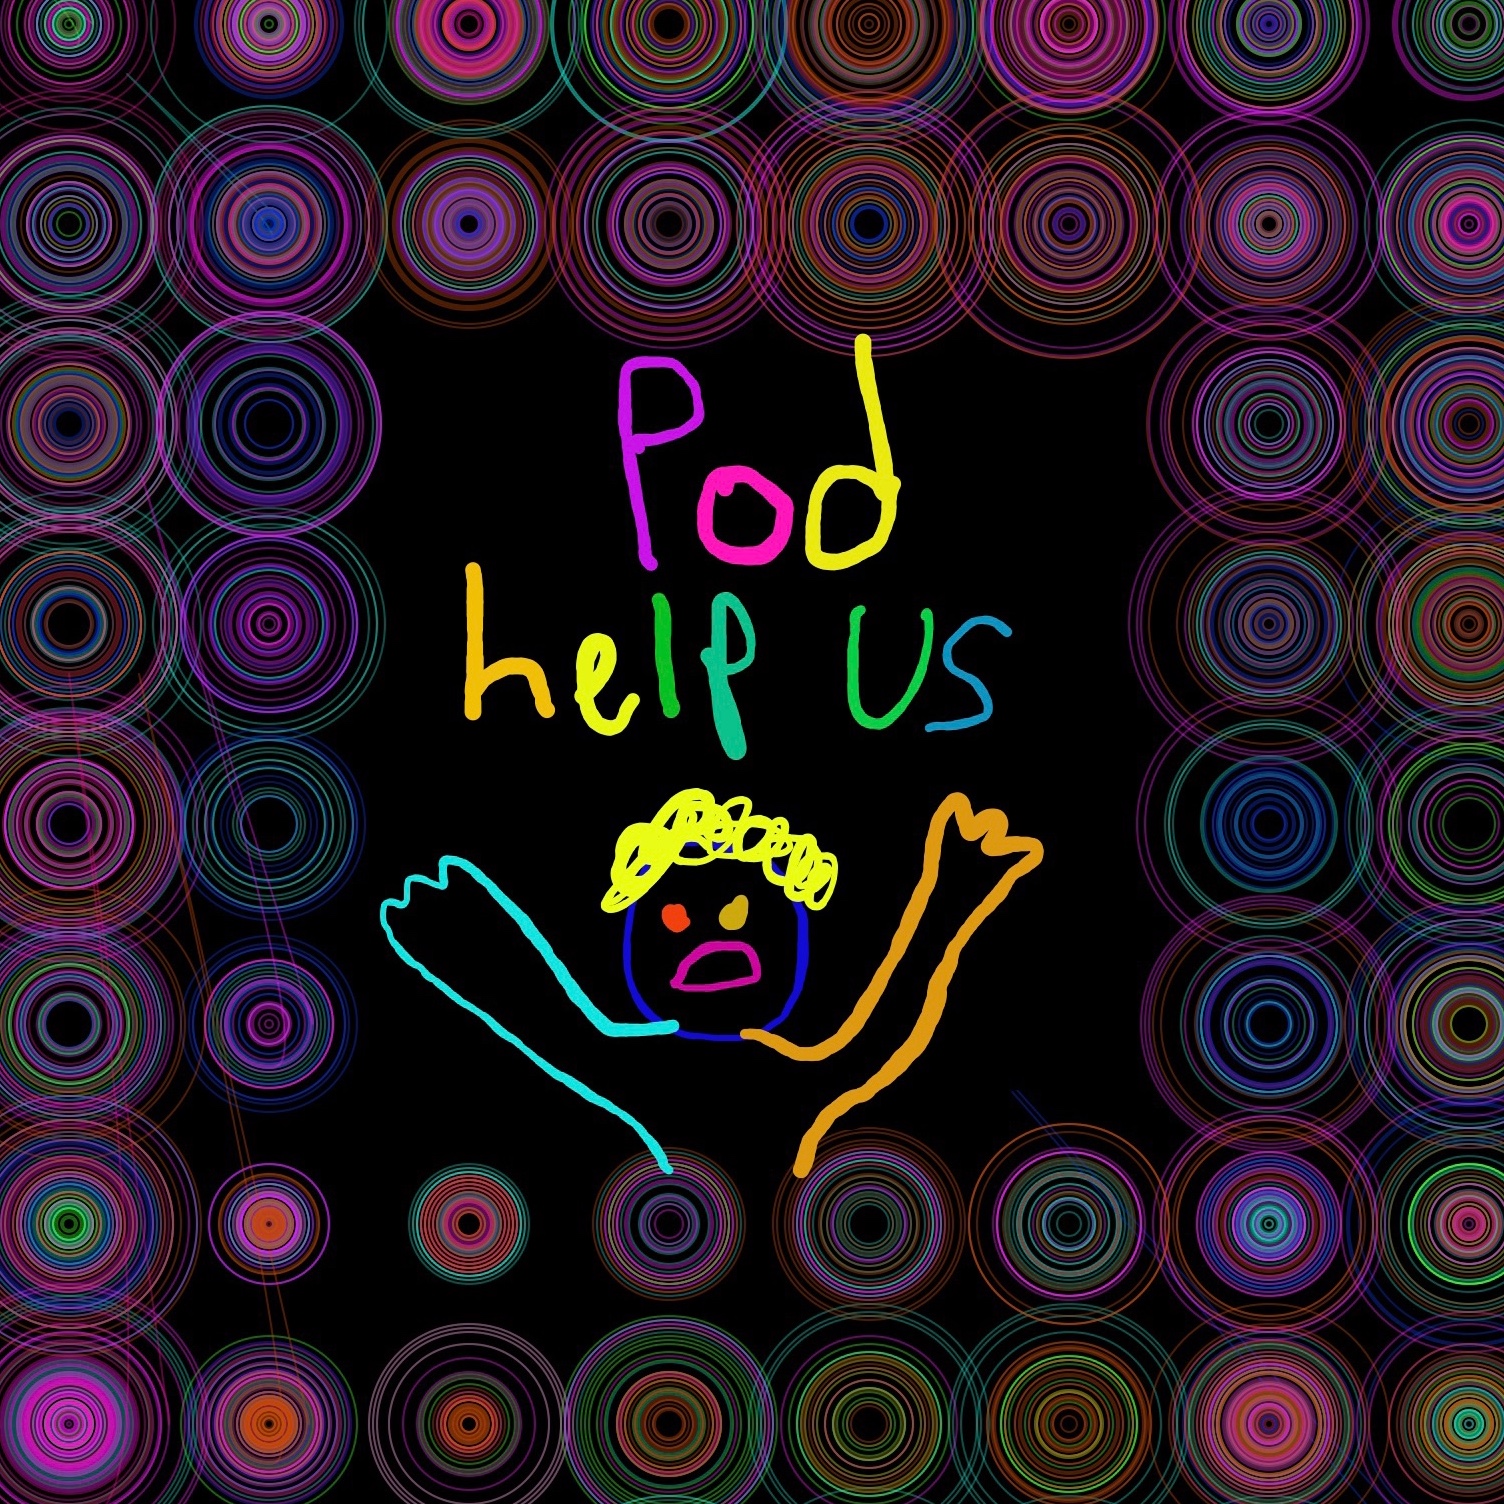 Pod Help Us